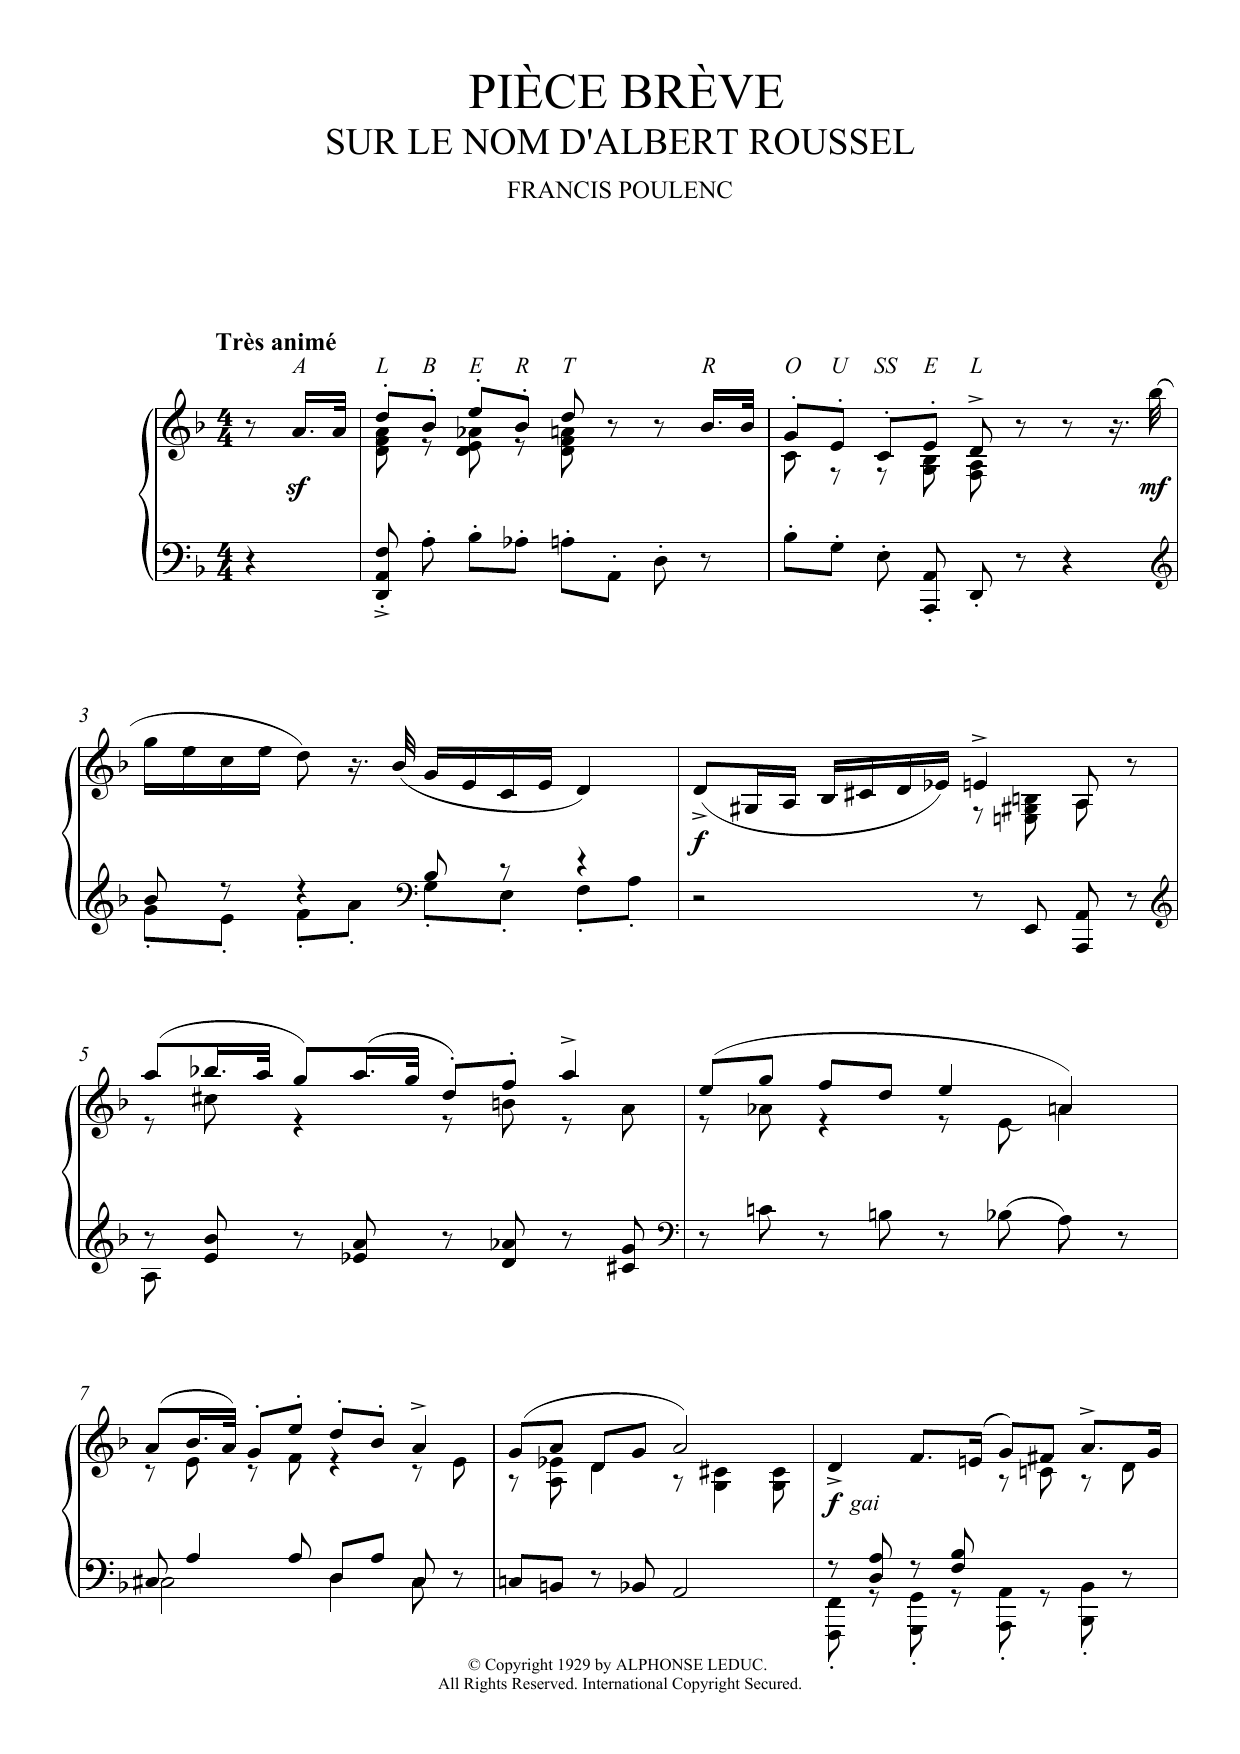 Francis Poulenc Piece Breve Sur Le Nom D'Albert Roussel Sheet Music Notes & Chords for Piano - Download or Print PDF